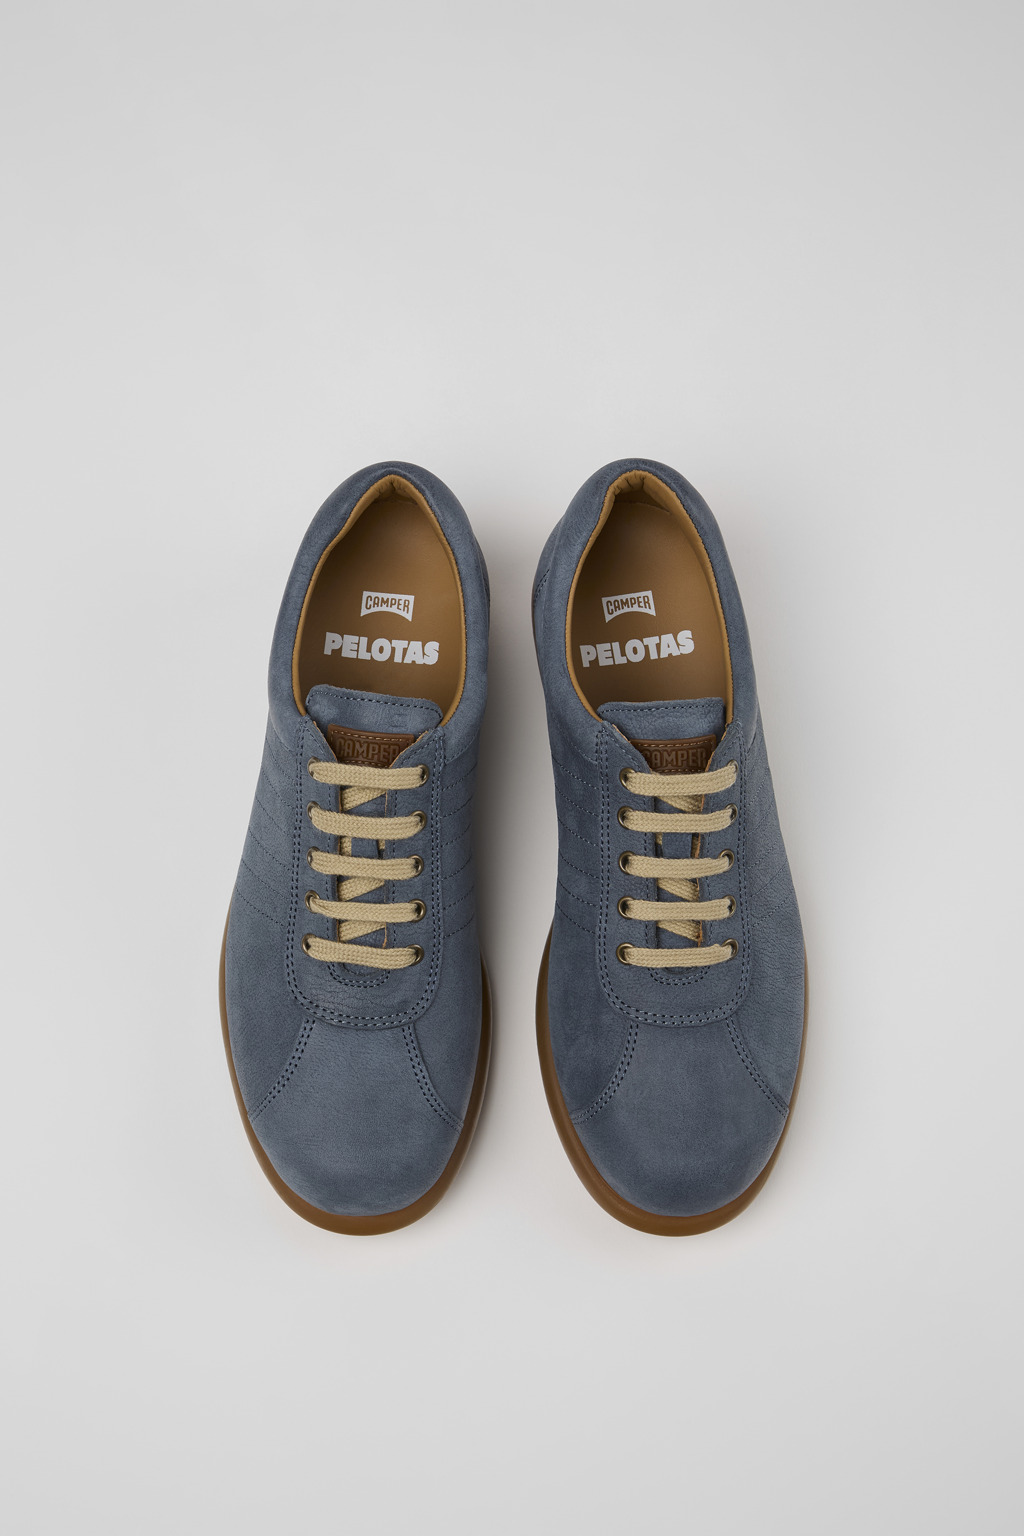 Pelotas Blue Casual for Women - Camper Shoes